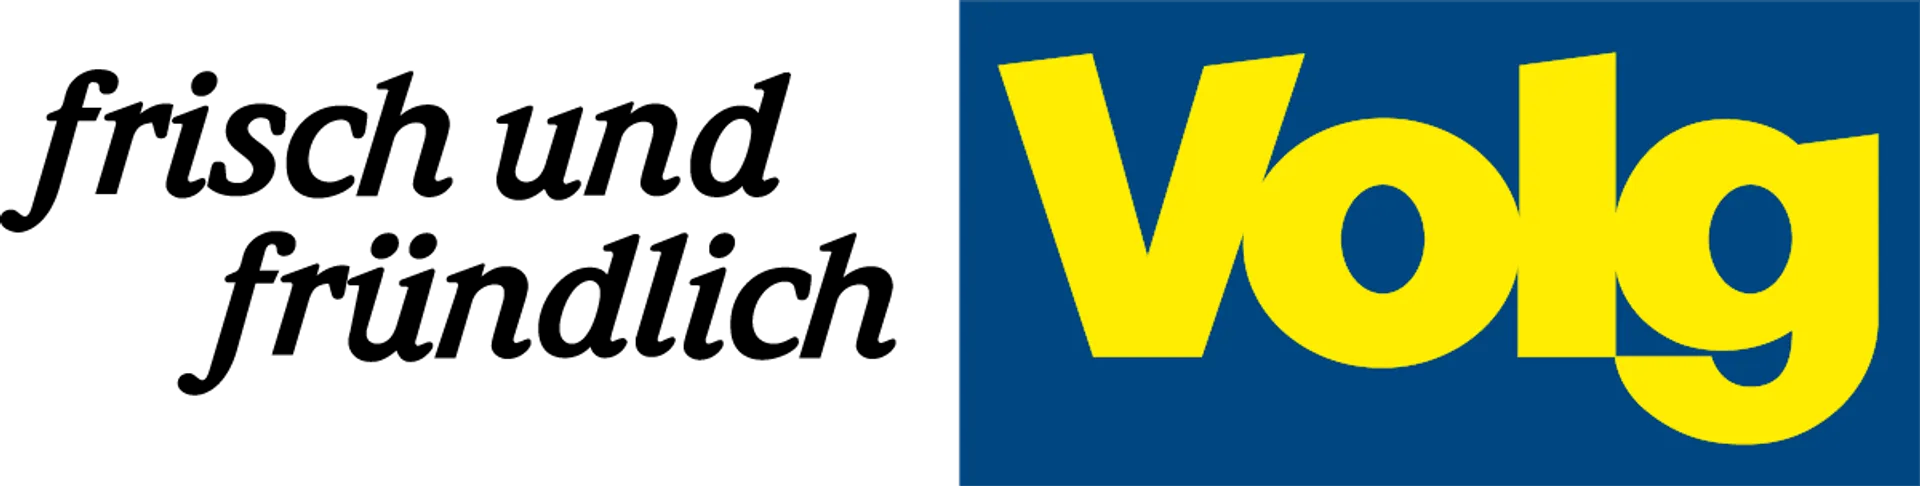 VOLG logo